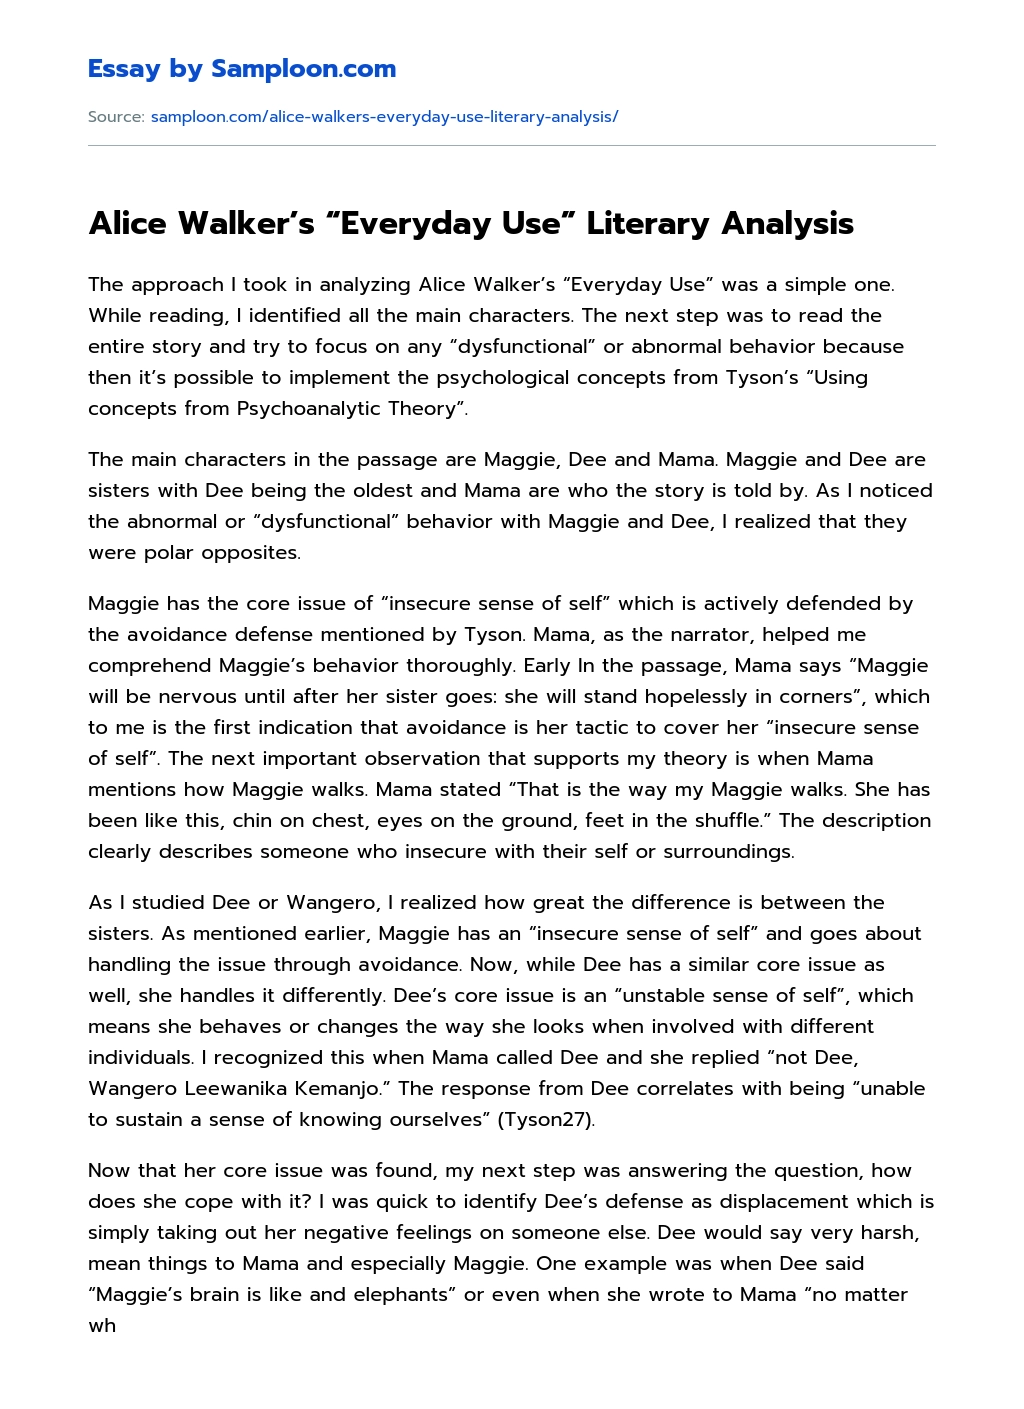 Alice Walker’s “Everyday Use” Literary Analysis essay